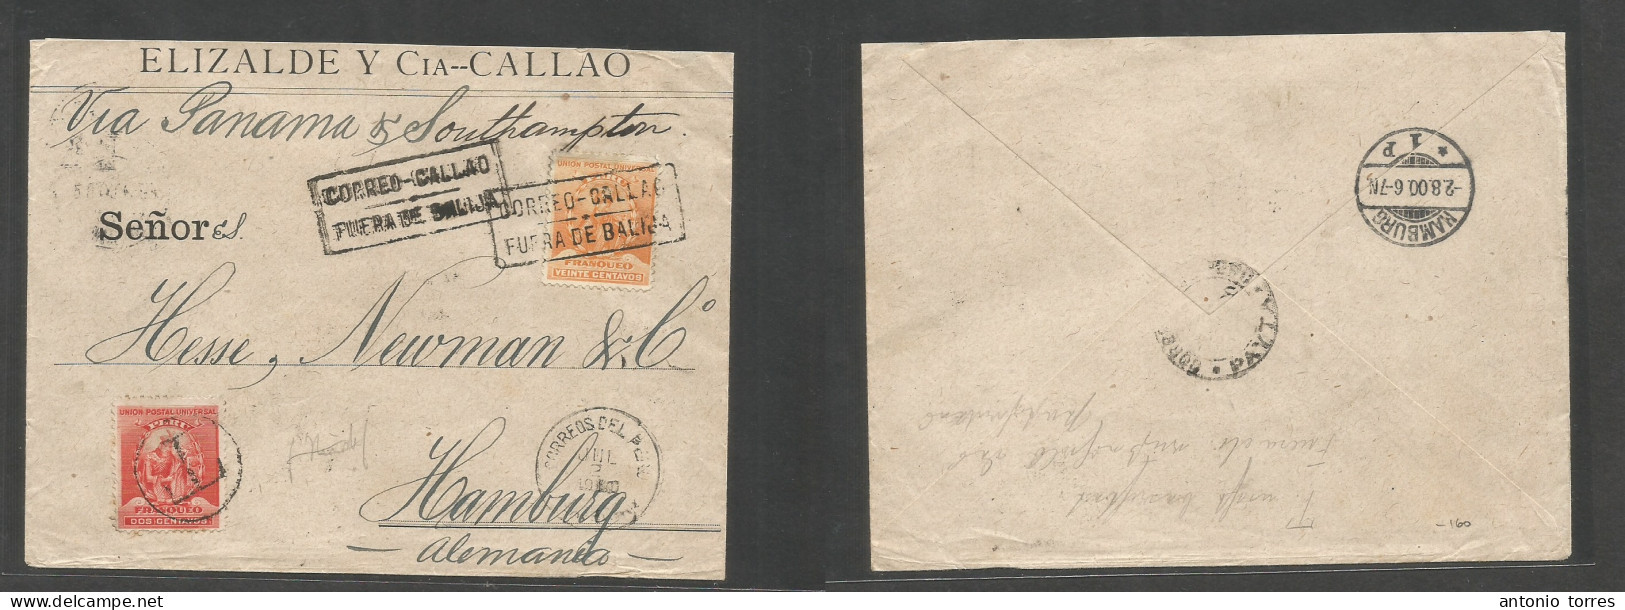 Peru. 1900 (2 July) Callao - Germany, Hamburg (2 Aug) Comercial Fkd Env At 20c + 2c + Taxed Adtls, Tied "Correo Callao/ - Peru